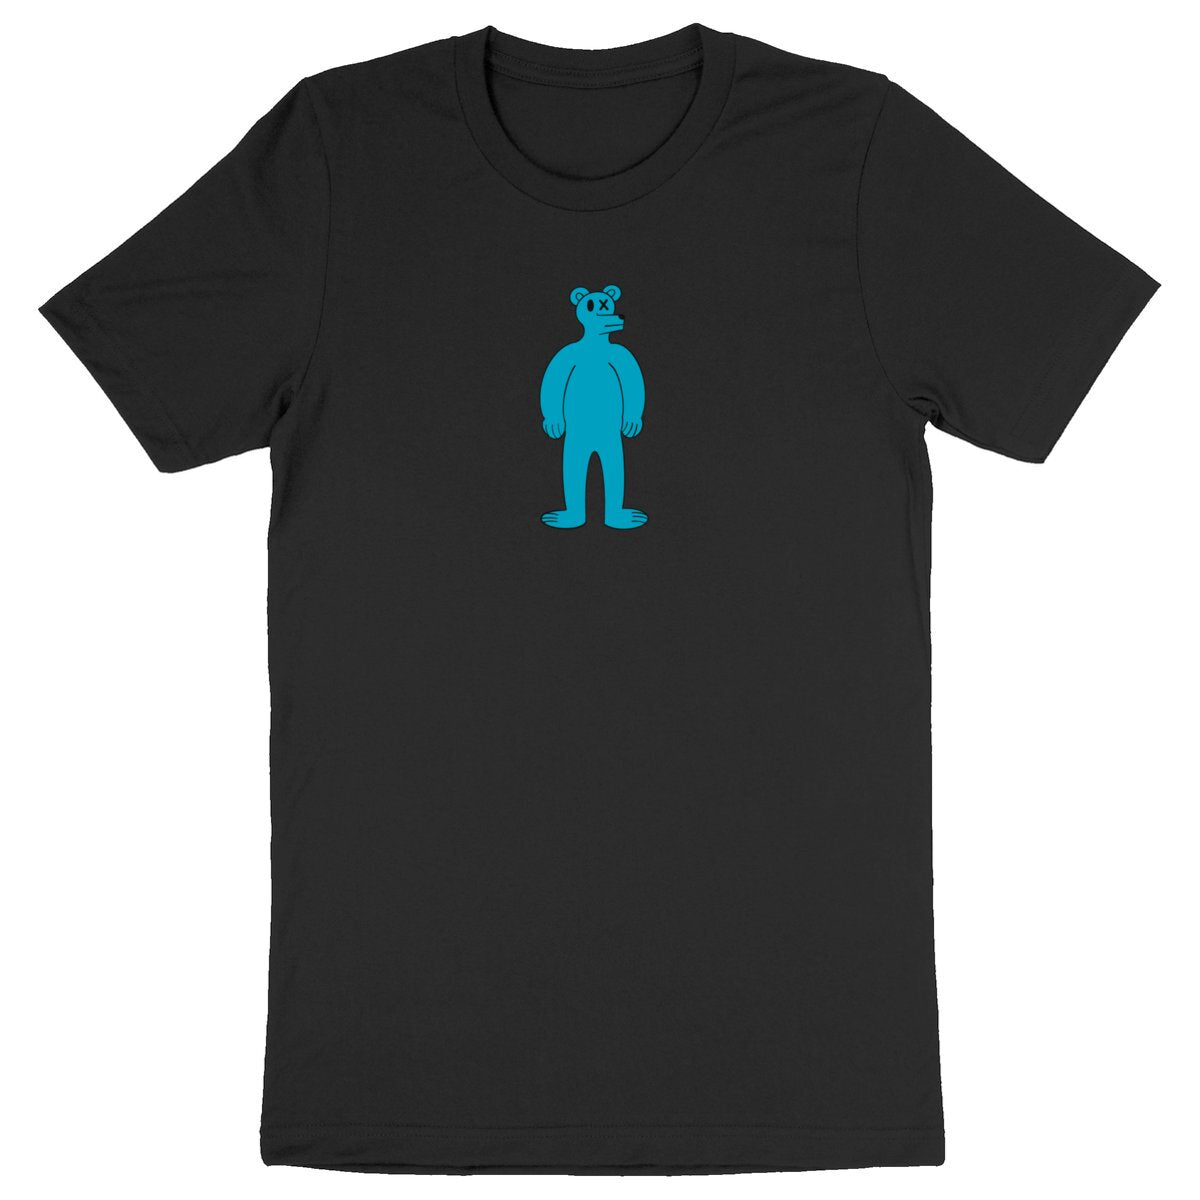 Ocean Blue Bear Graphic T-shirt